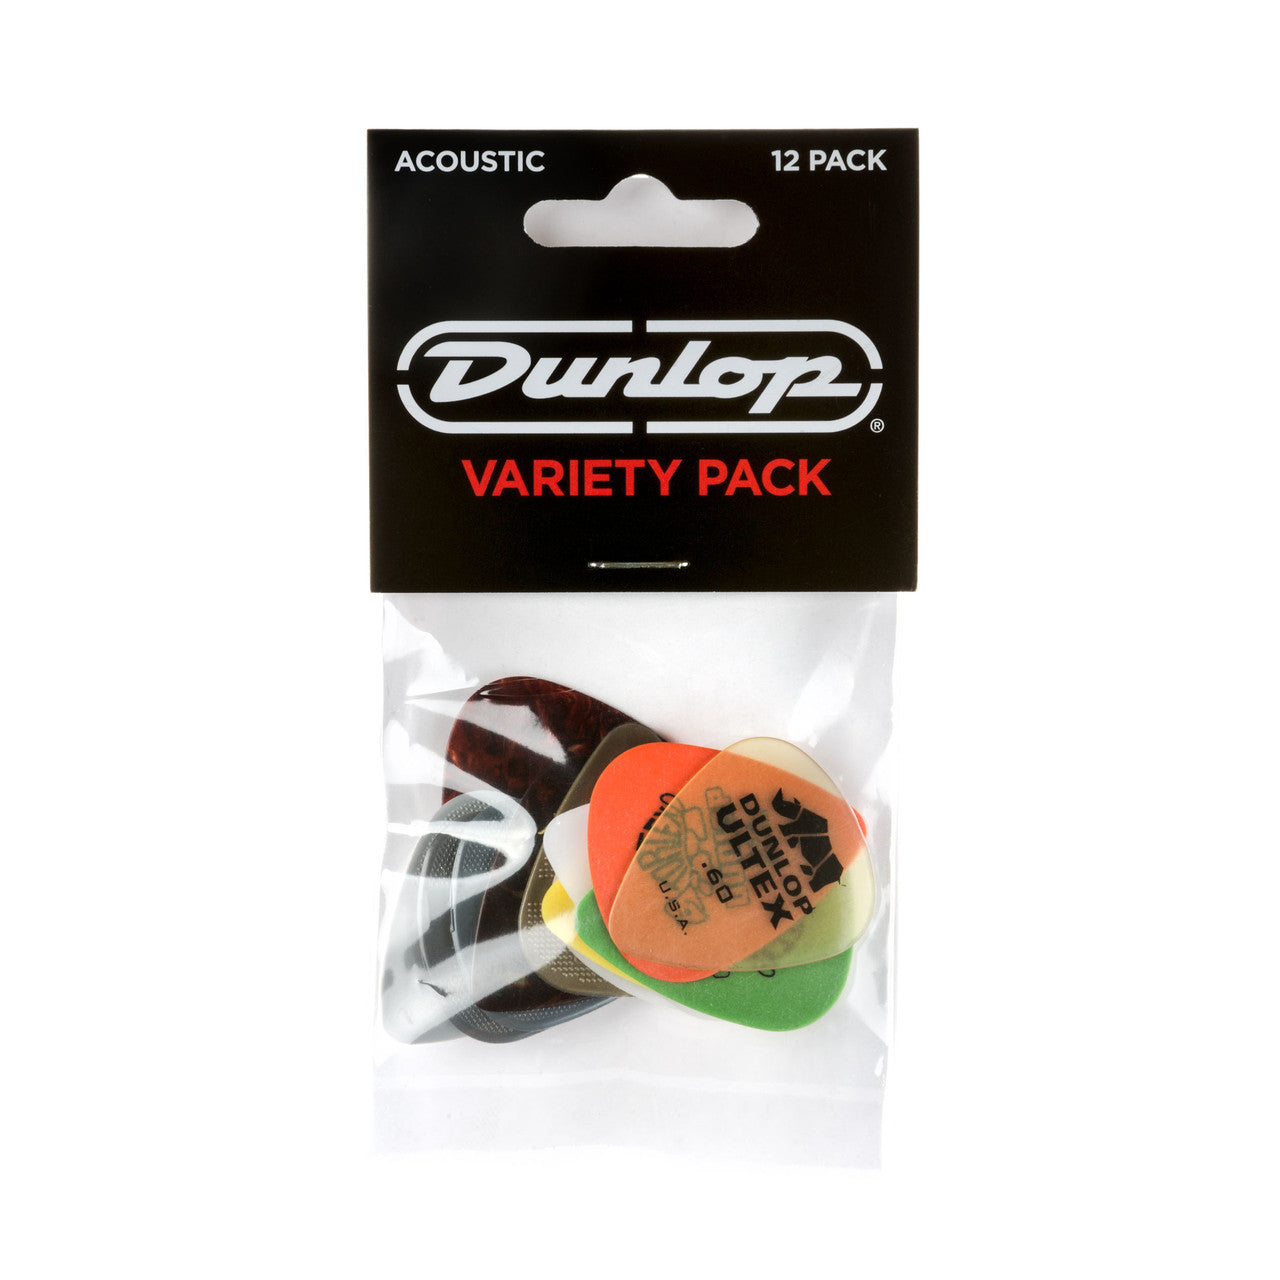 Dunlop Variety Pack Guitar Picks - 12 Pack PVP-112